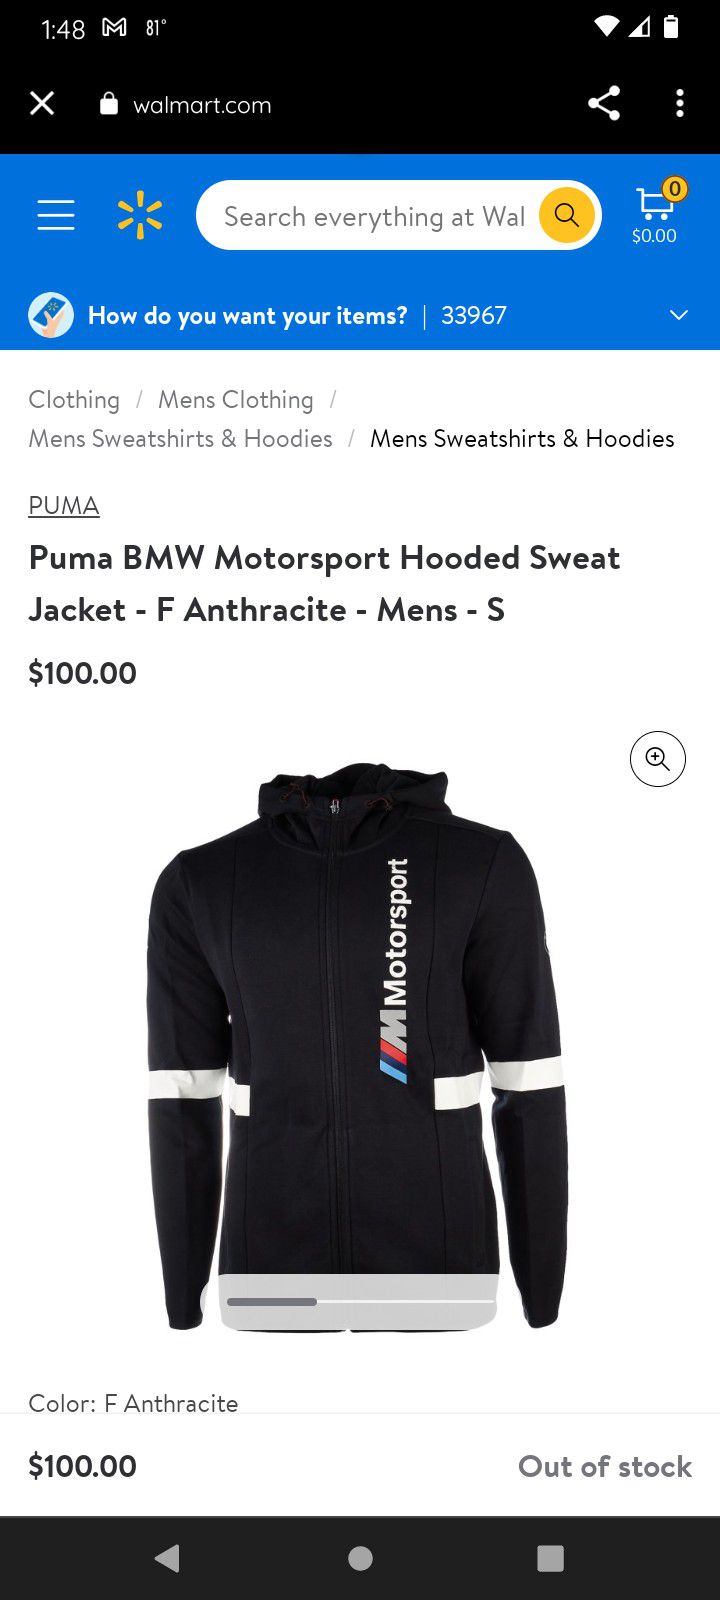 Puma BMW Motorsport Hooded Sweat Jacket - F Anthracite - Mens - M

